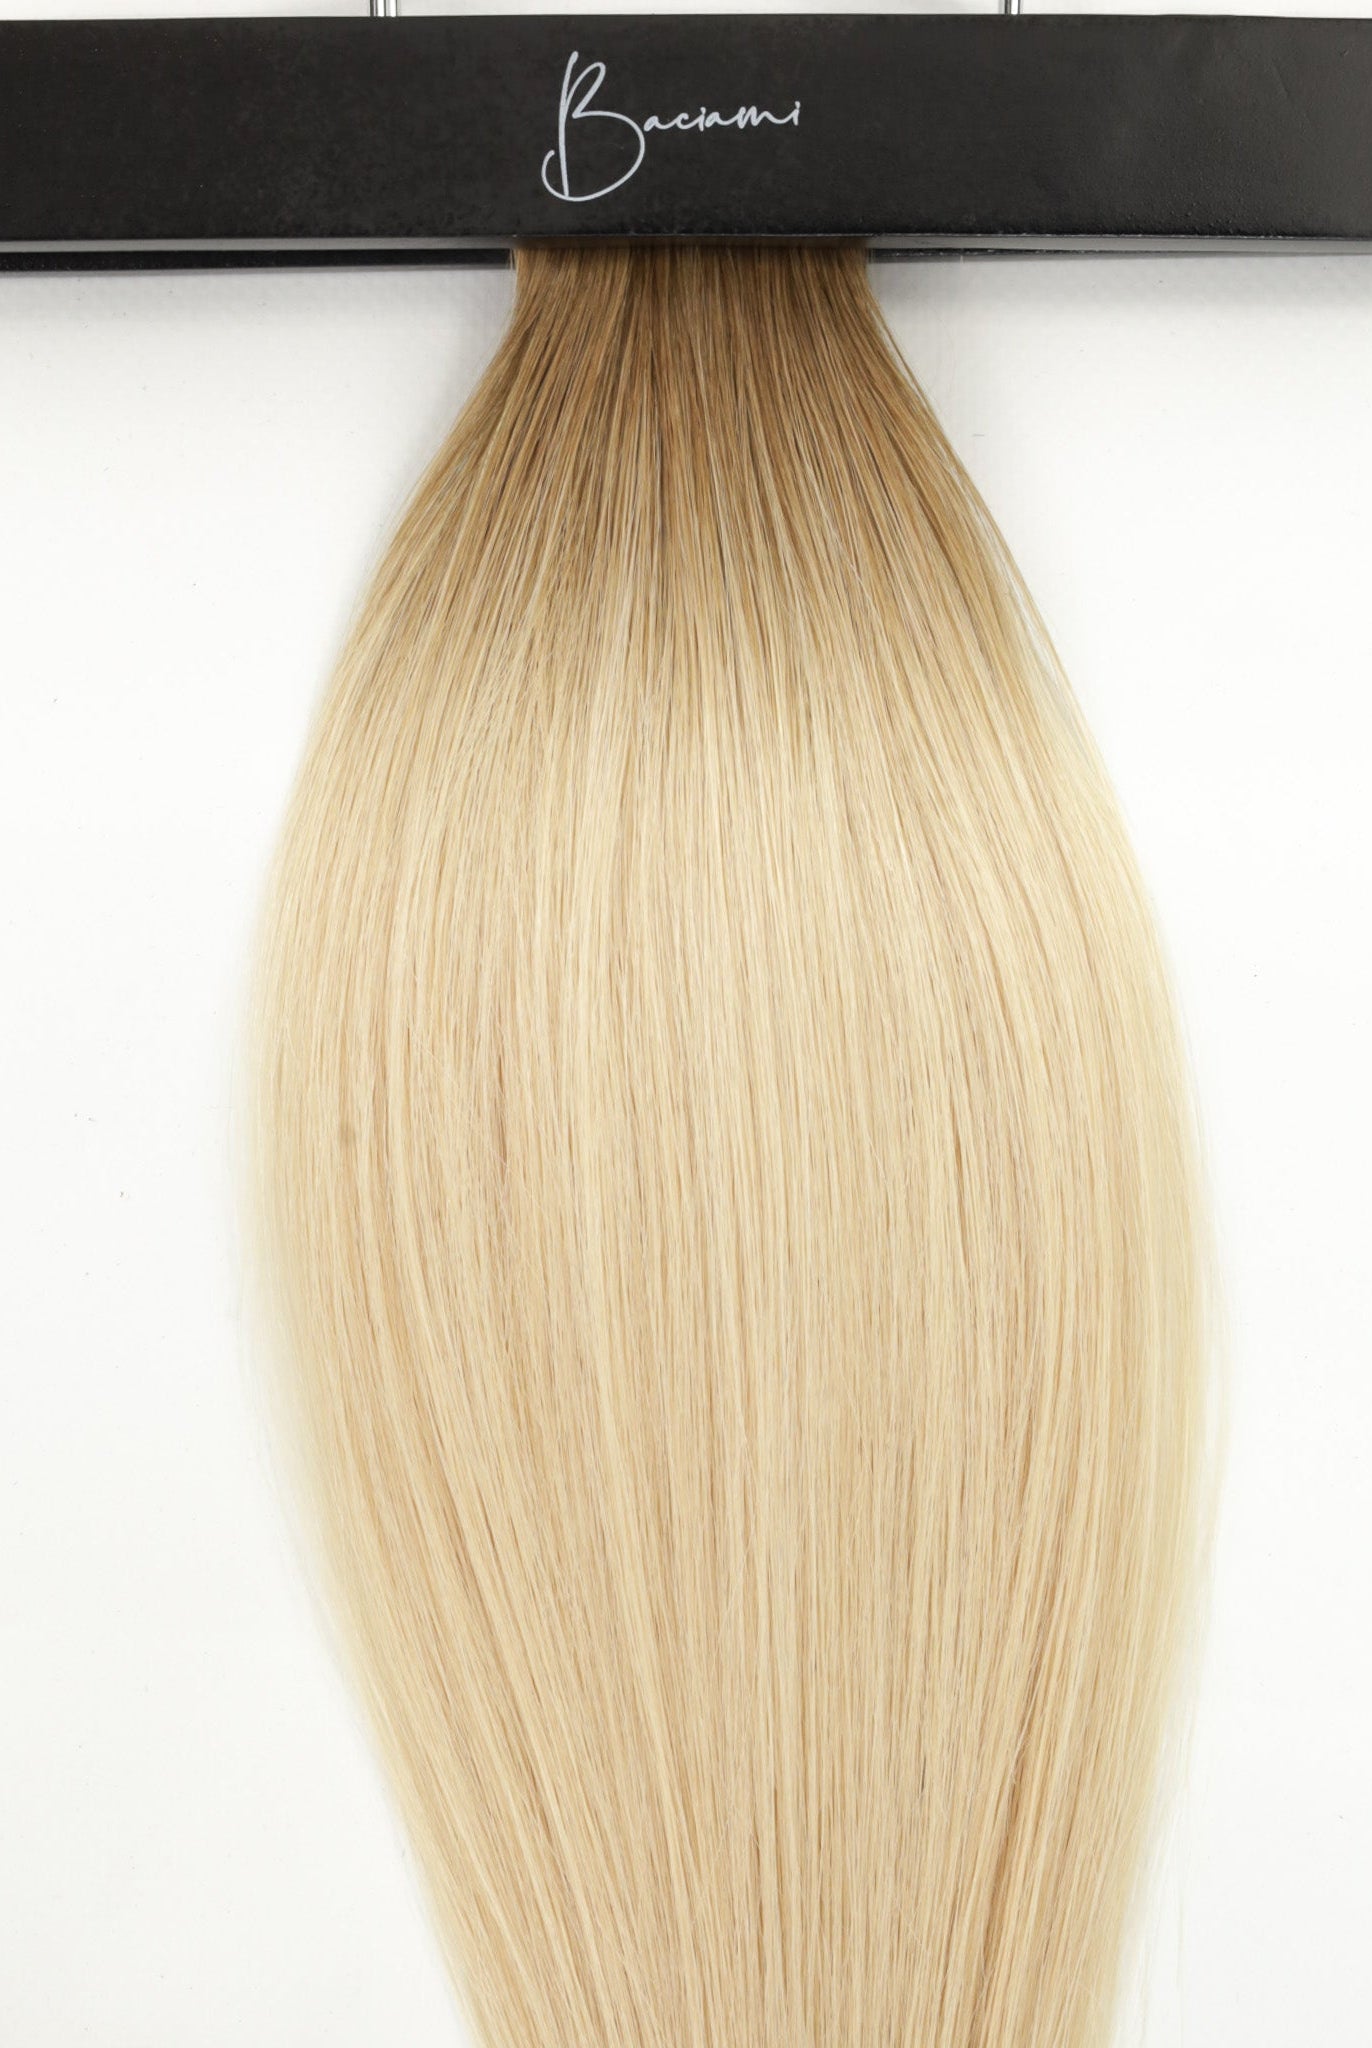 Jayne (root stretch) - Genius weft - Baciami® Hair Extensions